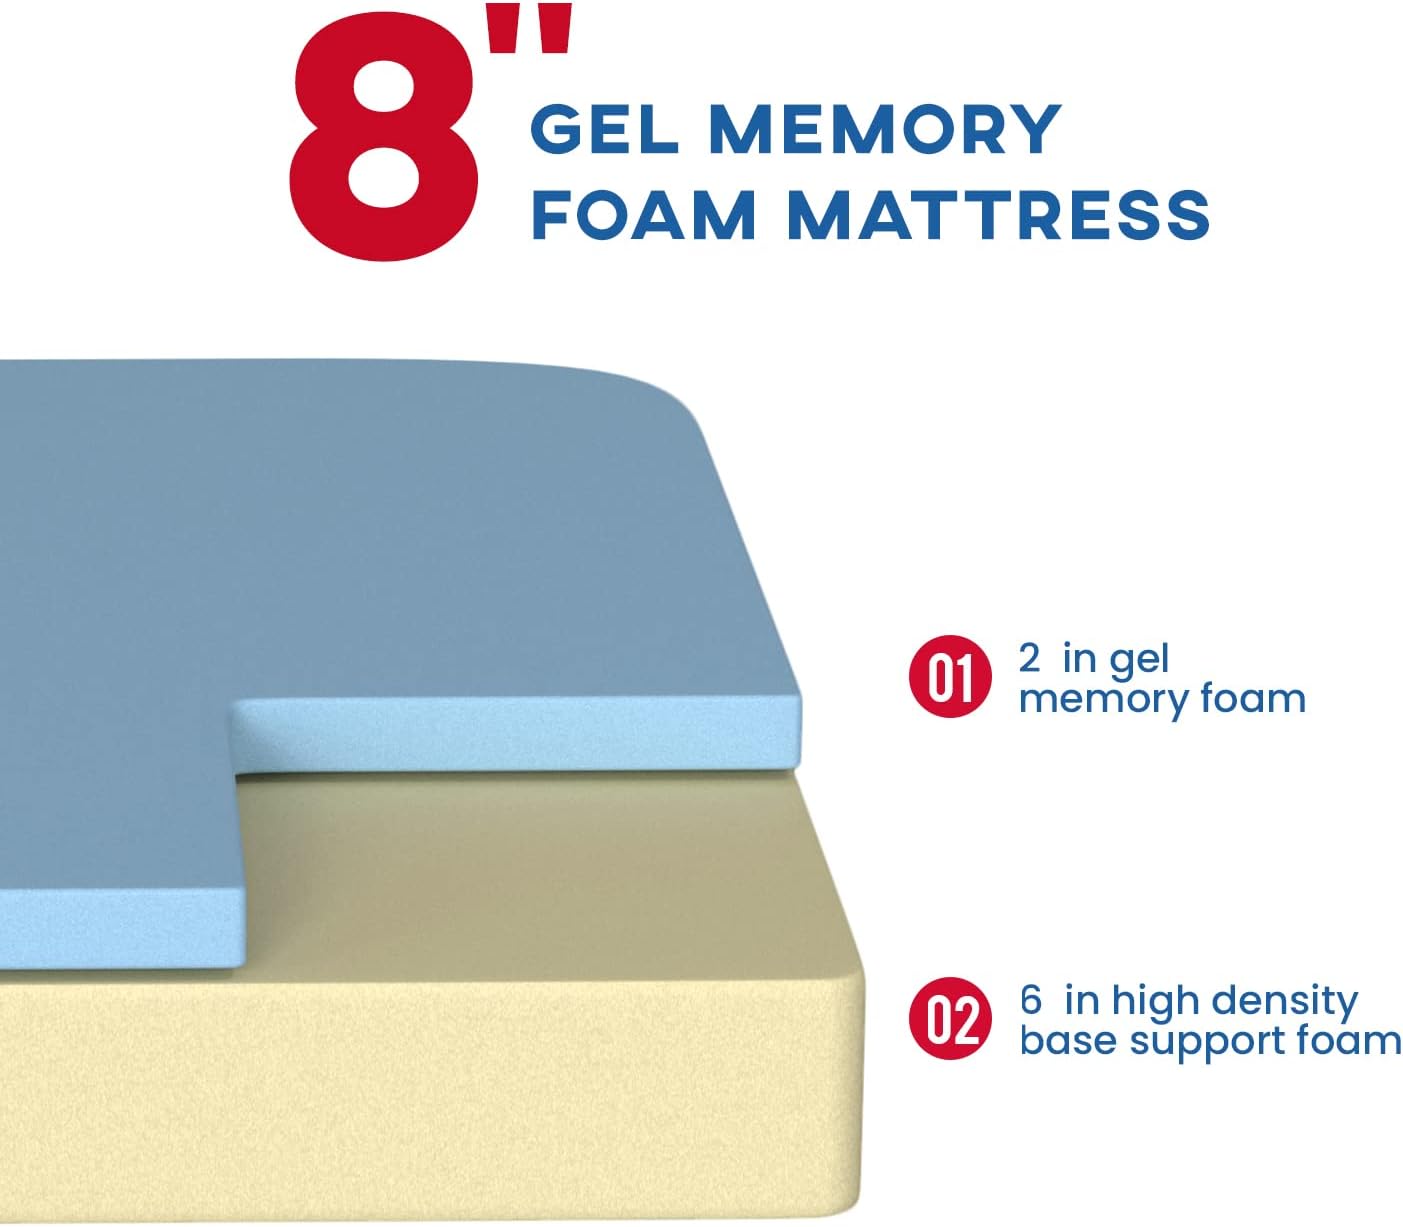 NEW - BestMassage FULL Mattress, 8 inch Gel Memory Foam Mattress  for Cool Sleep & Pressure Relief, Medium Firm Mattresses CertiPUR-US Certified/Bed-in-a-Box/Pressure Relieving - Retail $164